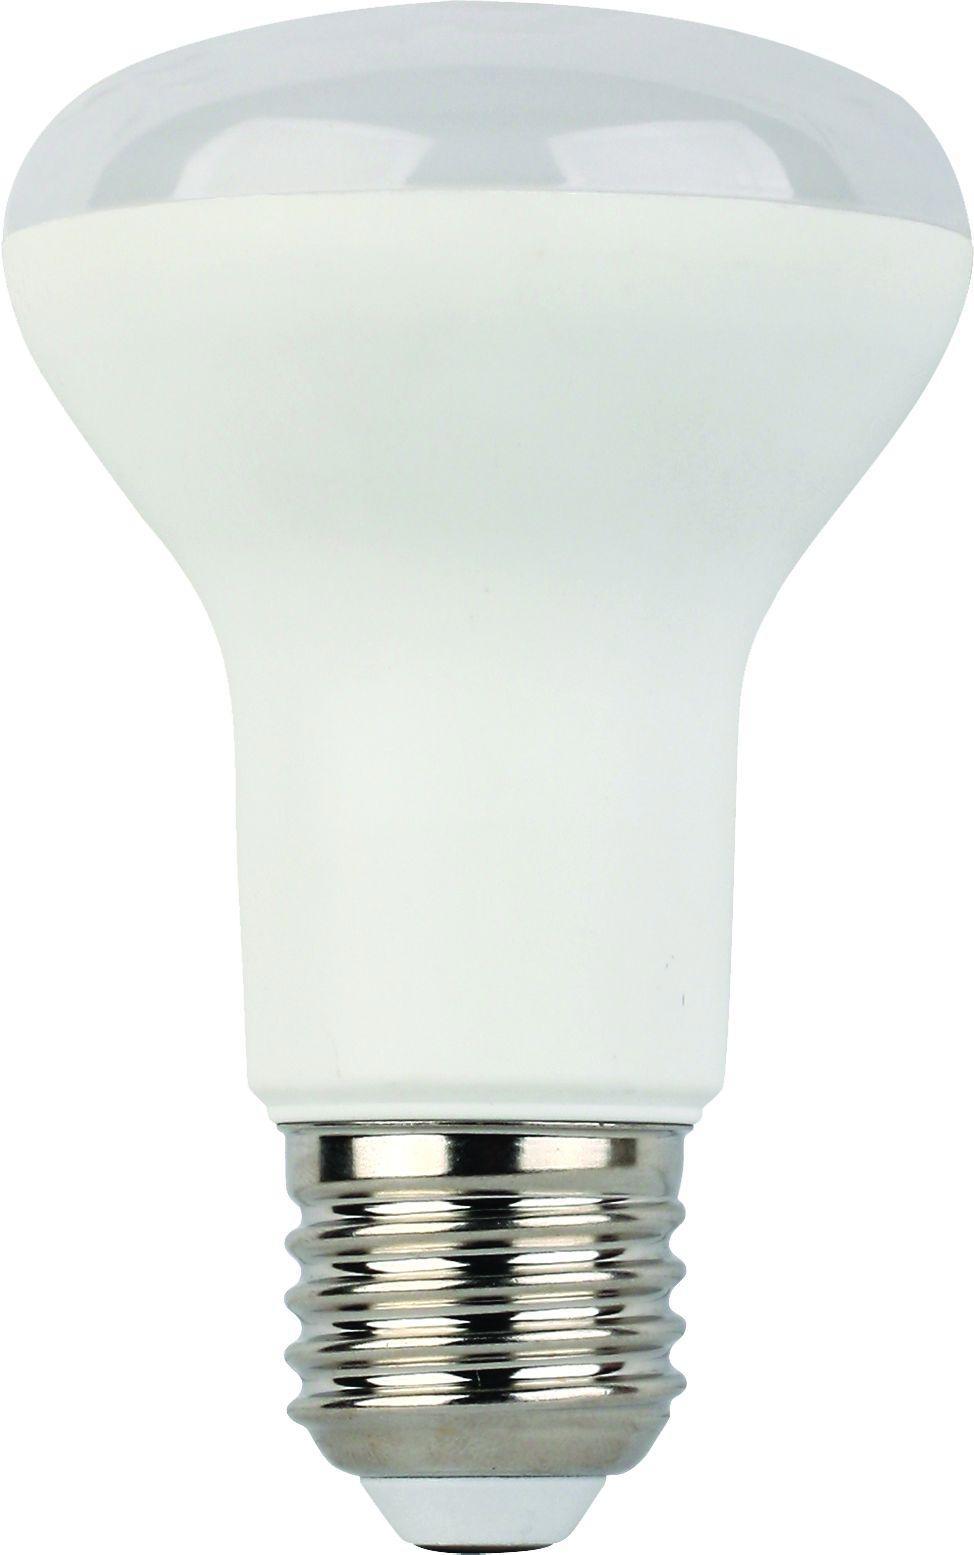 90121167 Лампа стандарт светодионая E27 11 Вт рефлекторная 880 Лм теплый свет STLM-0112362 ECOLA